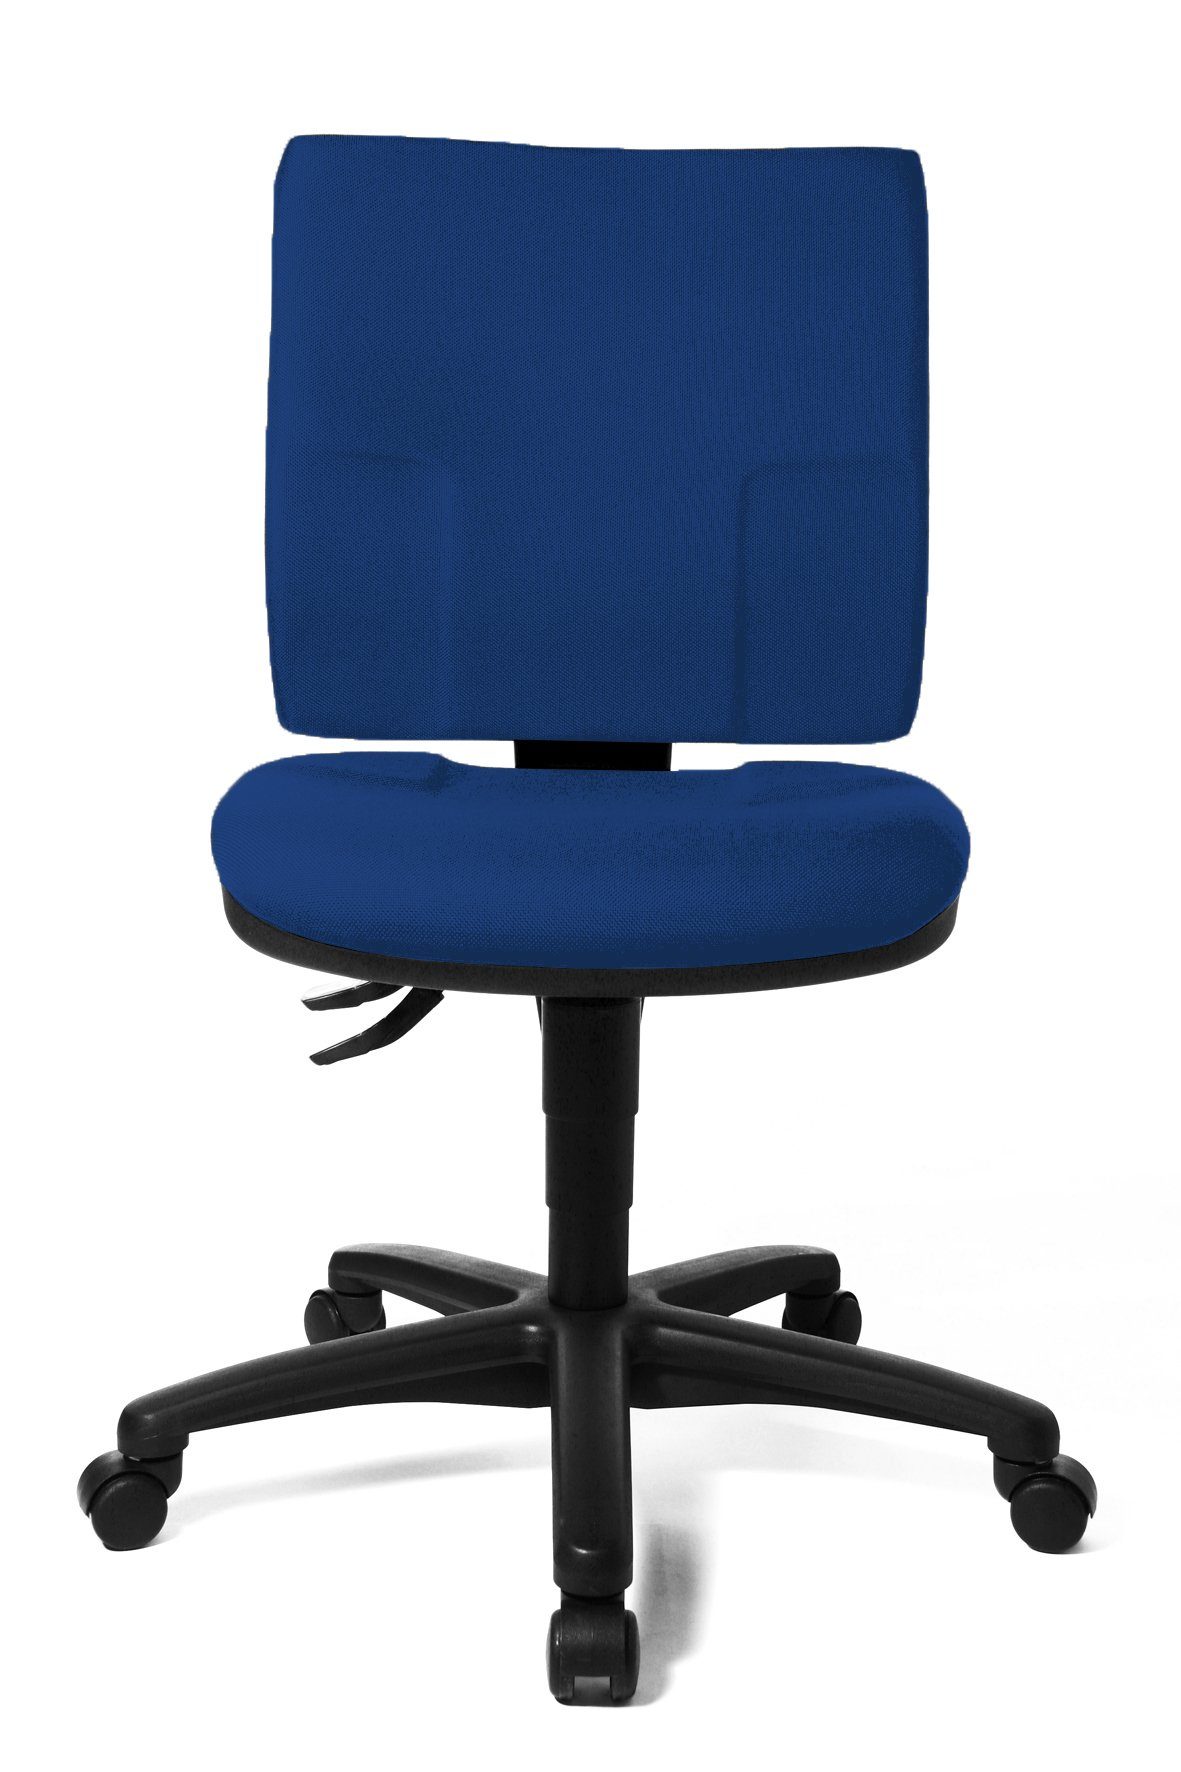 GS zertifiziert Bezug: Blau Kunststofffußkreuz, #NAME? Bürodrehstuhl, gepolstert, Drehstuhl Steelboxx (1),